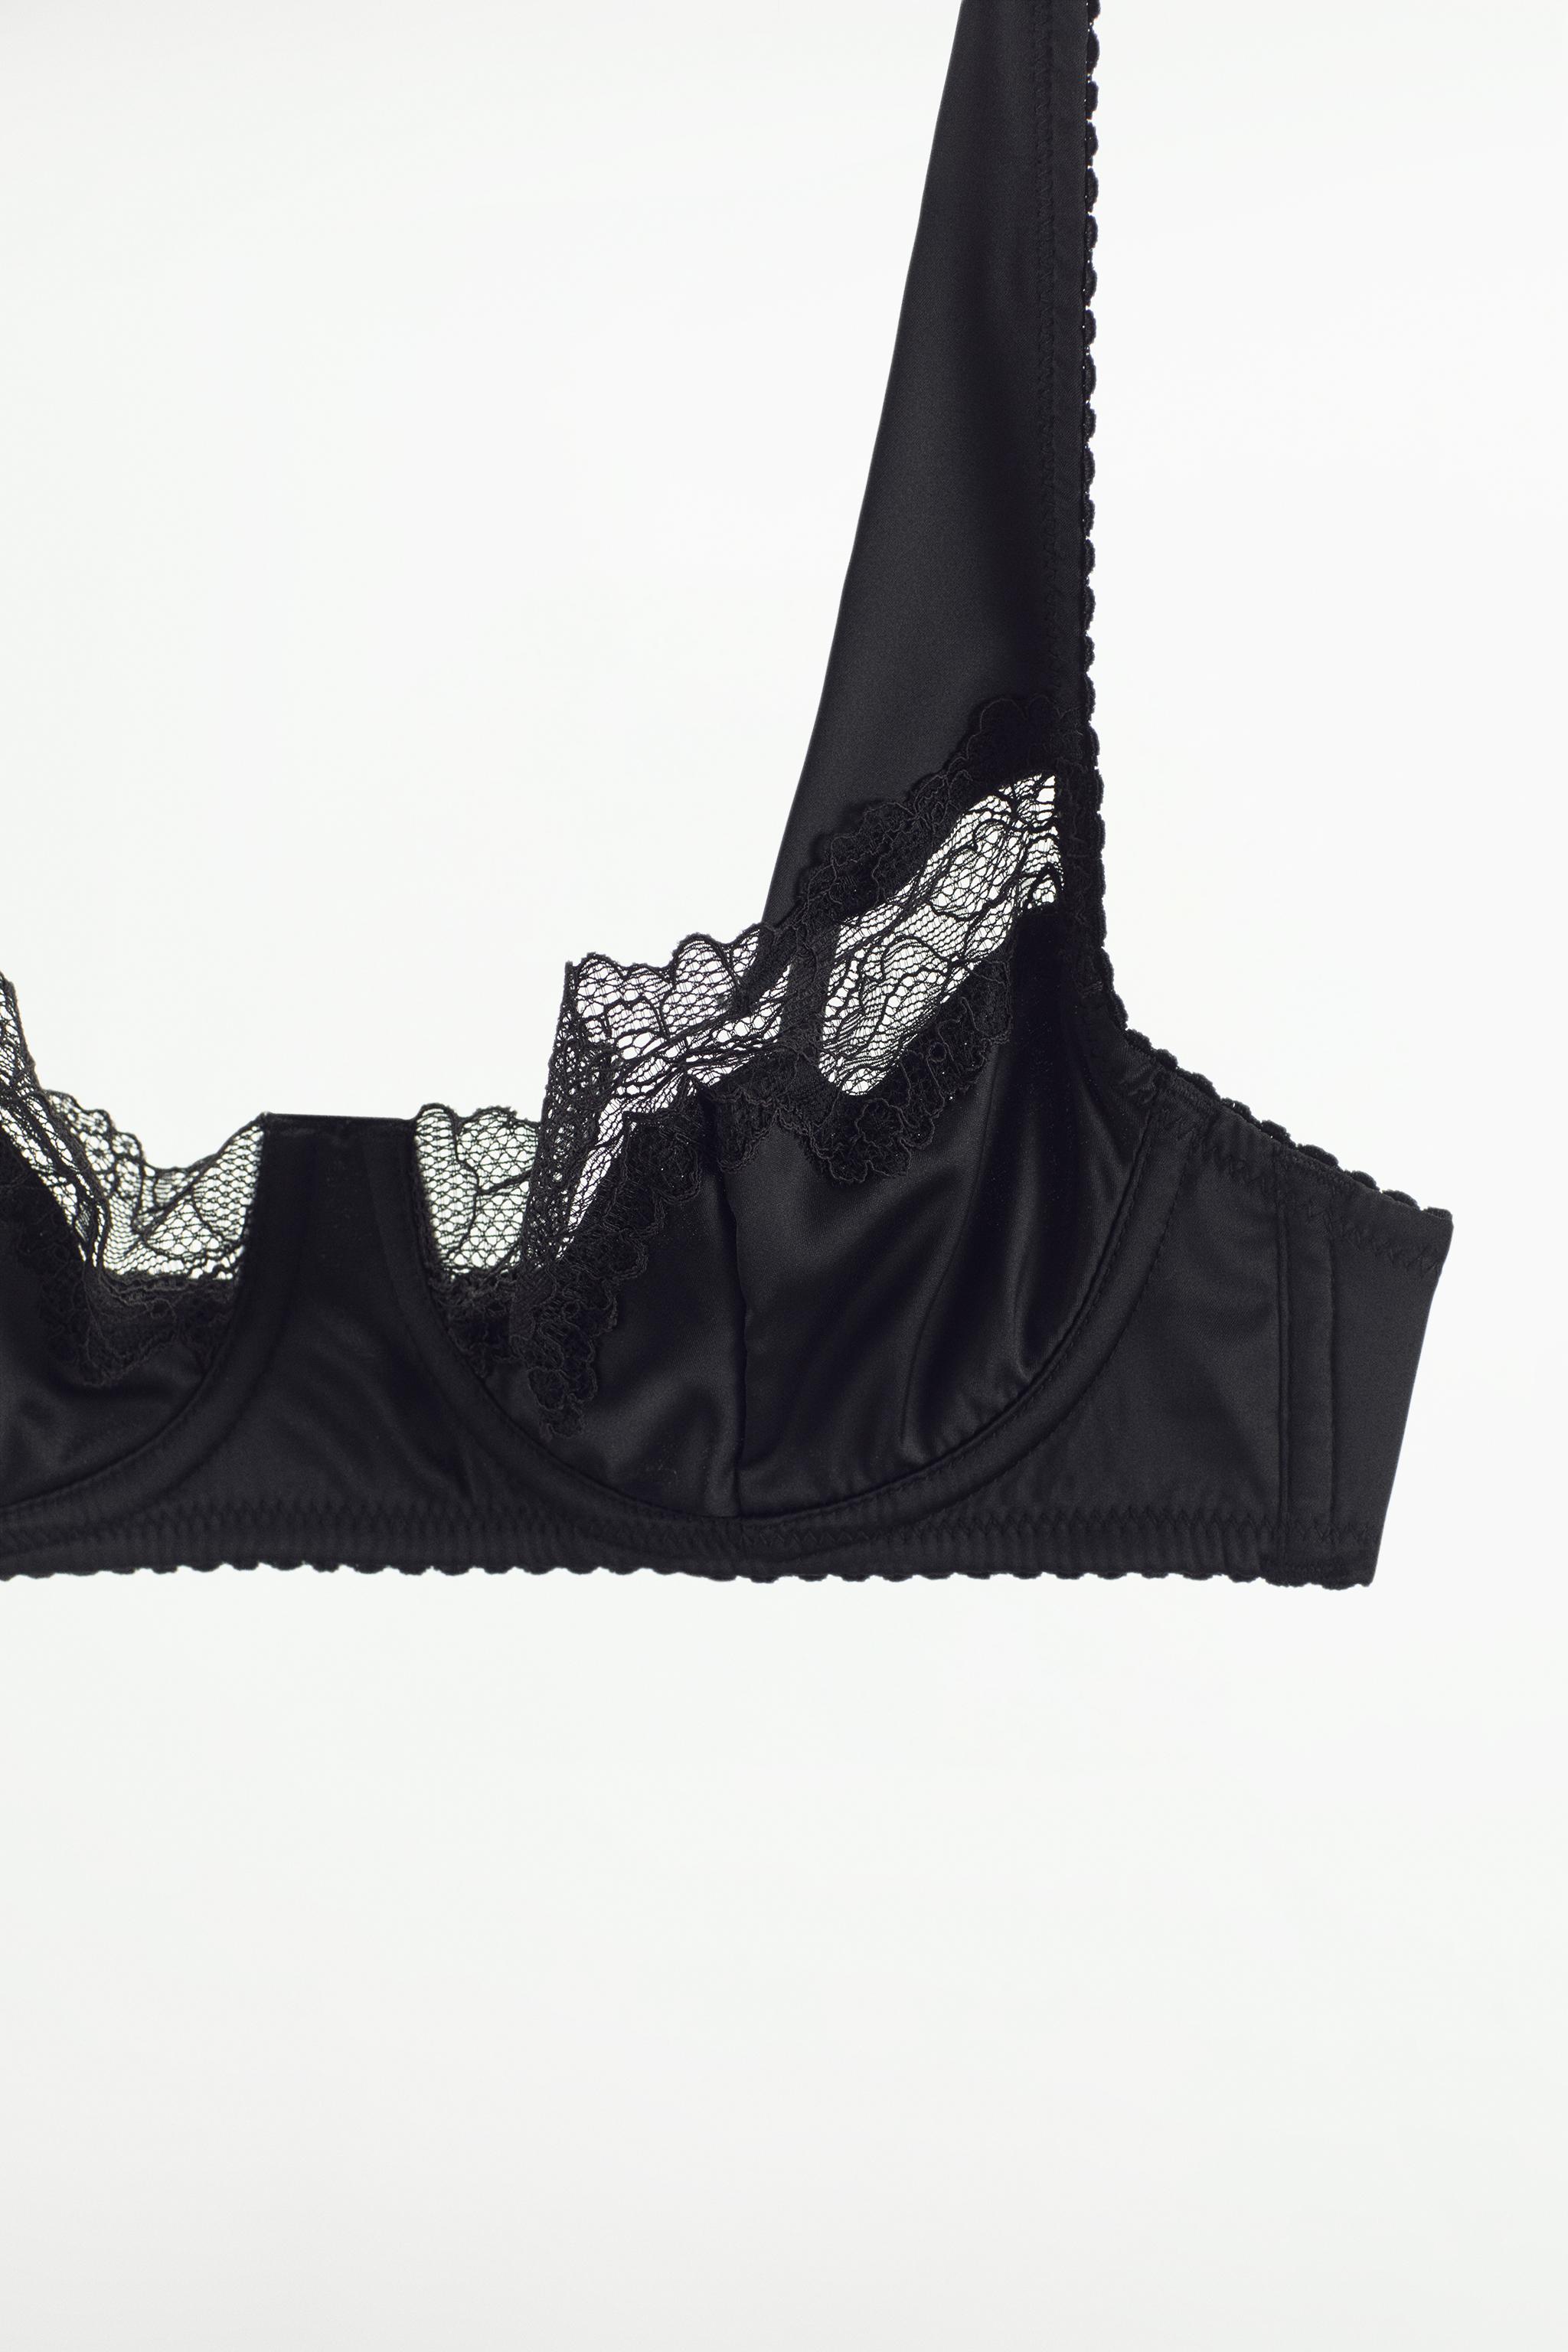 ZARA black lace sheer triangle satin bralette Size M - $23 New